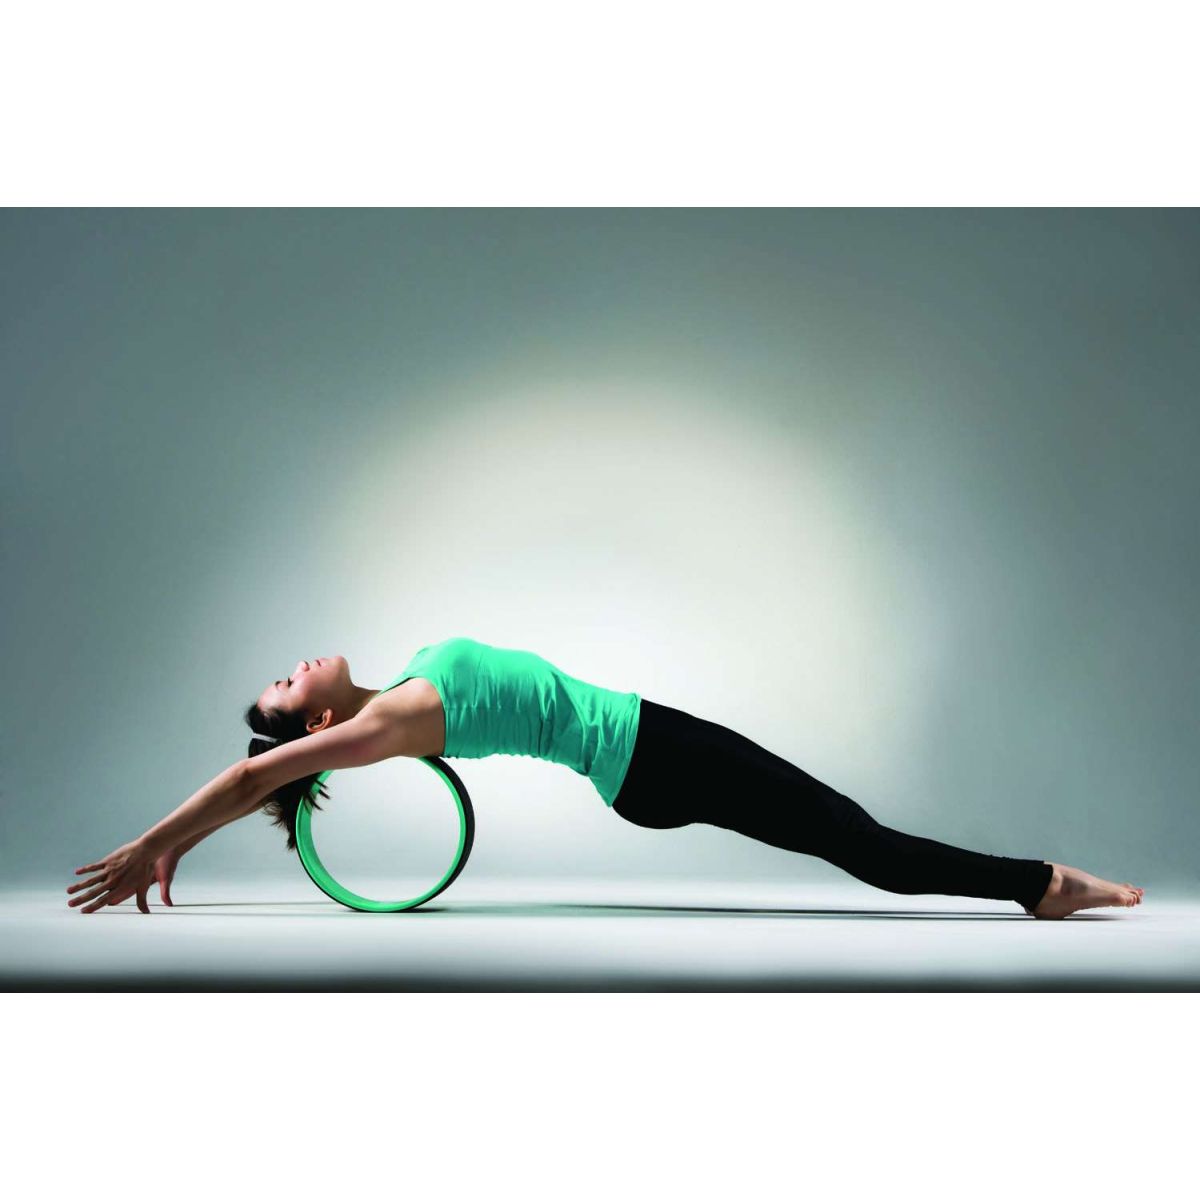 Set Accesorios de Yoga para Principiantes - Kit de Rueda de Yoga + 2 Yoga  Blocks, eBook